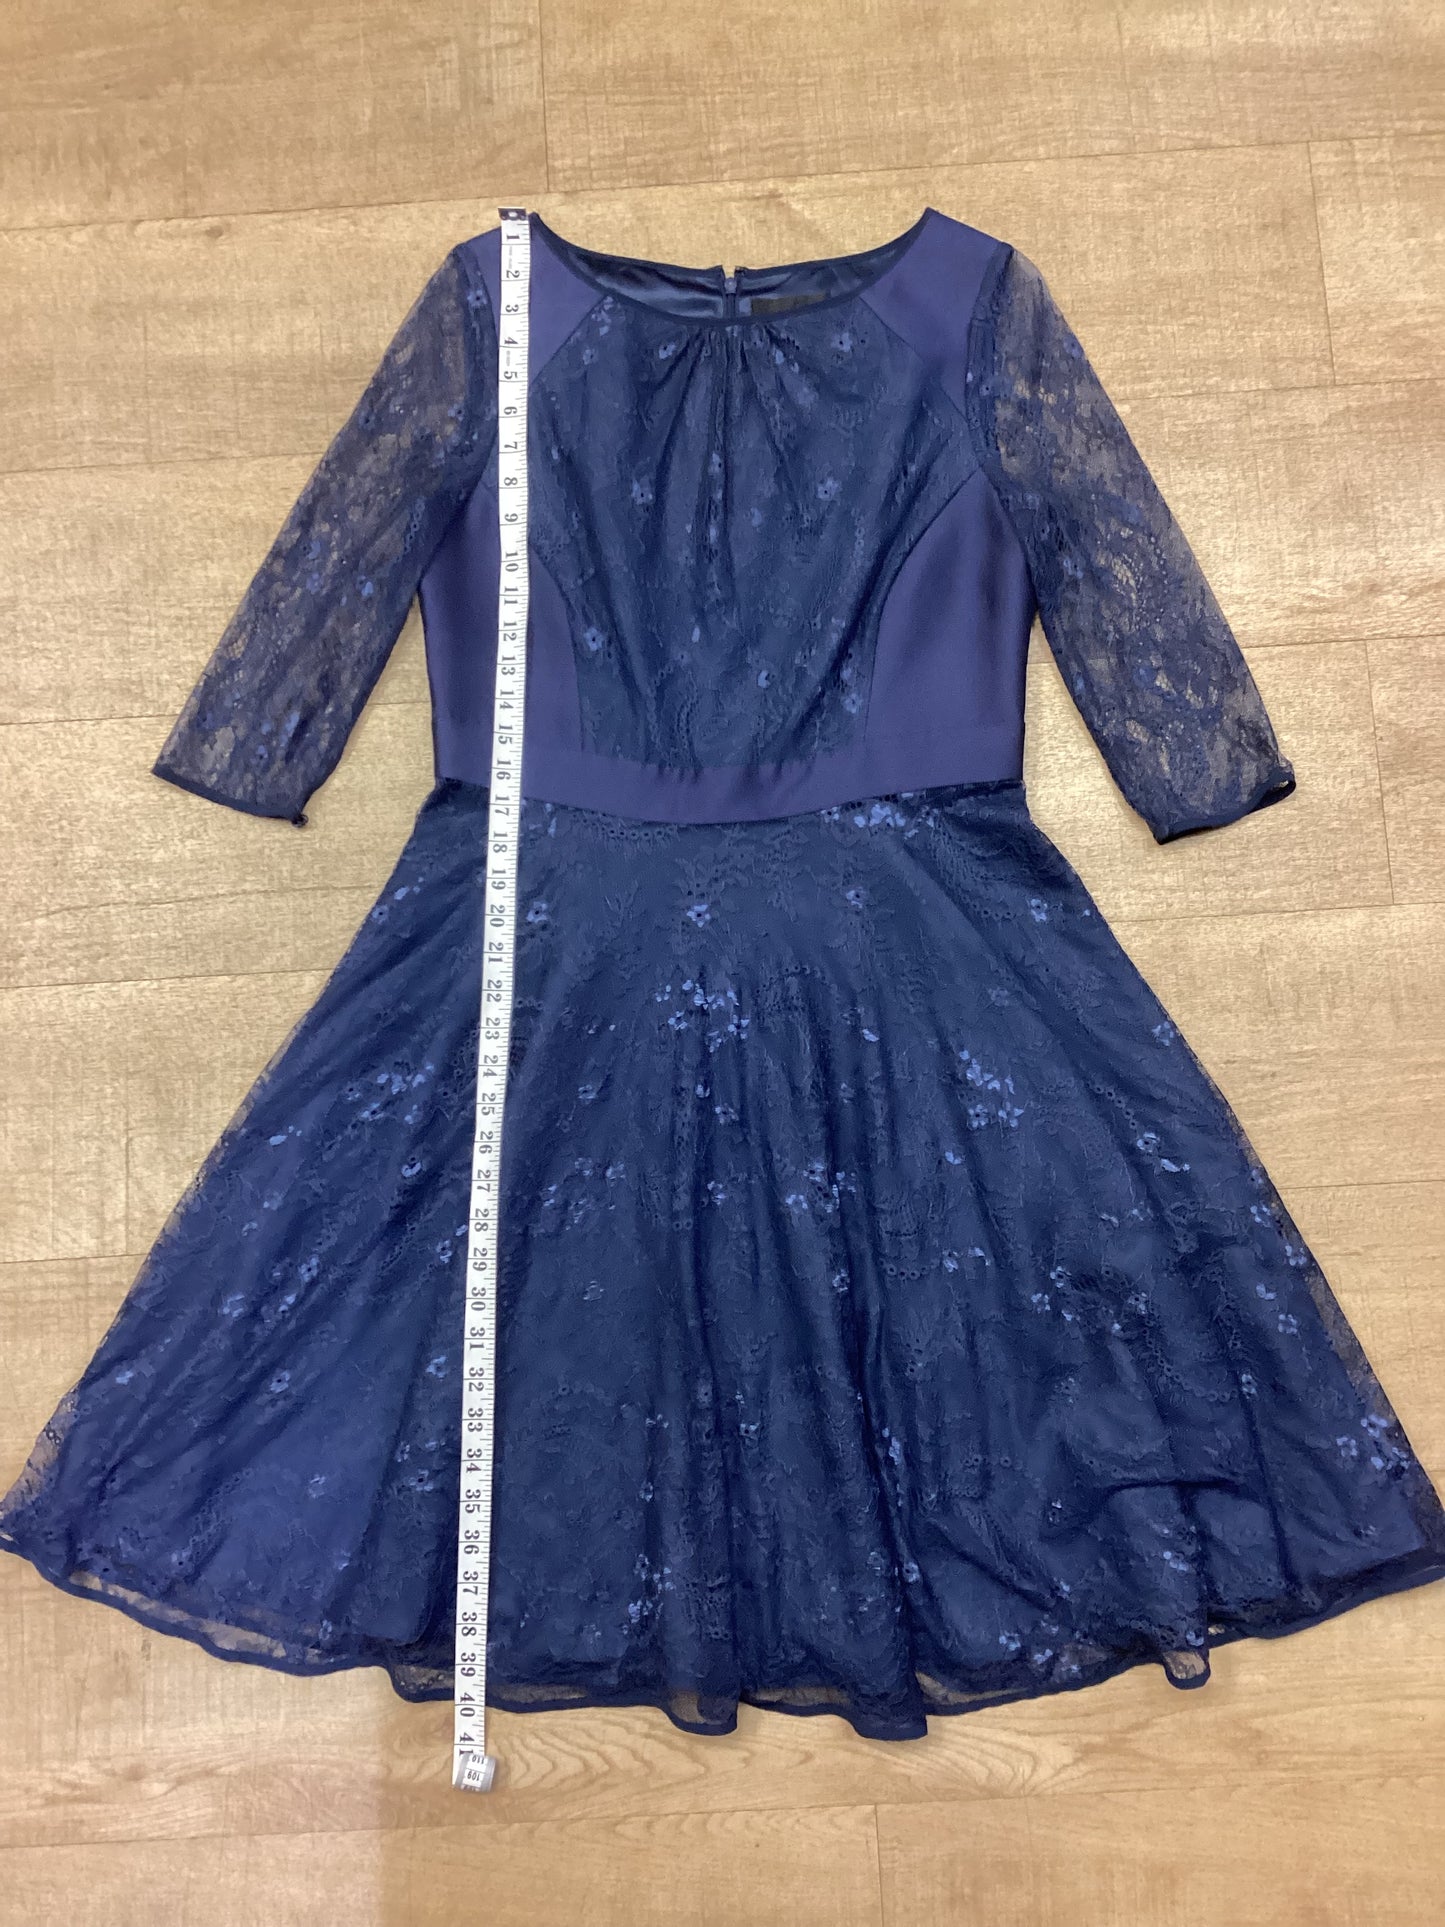 Coast Blue Silk Blend Dress w/Lace Size 14